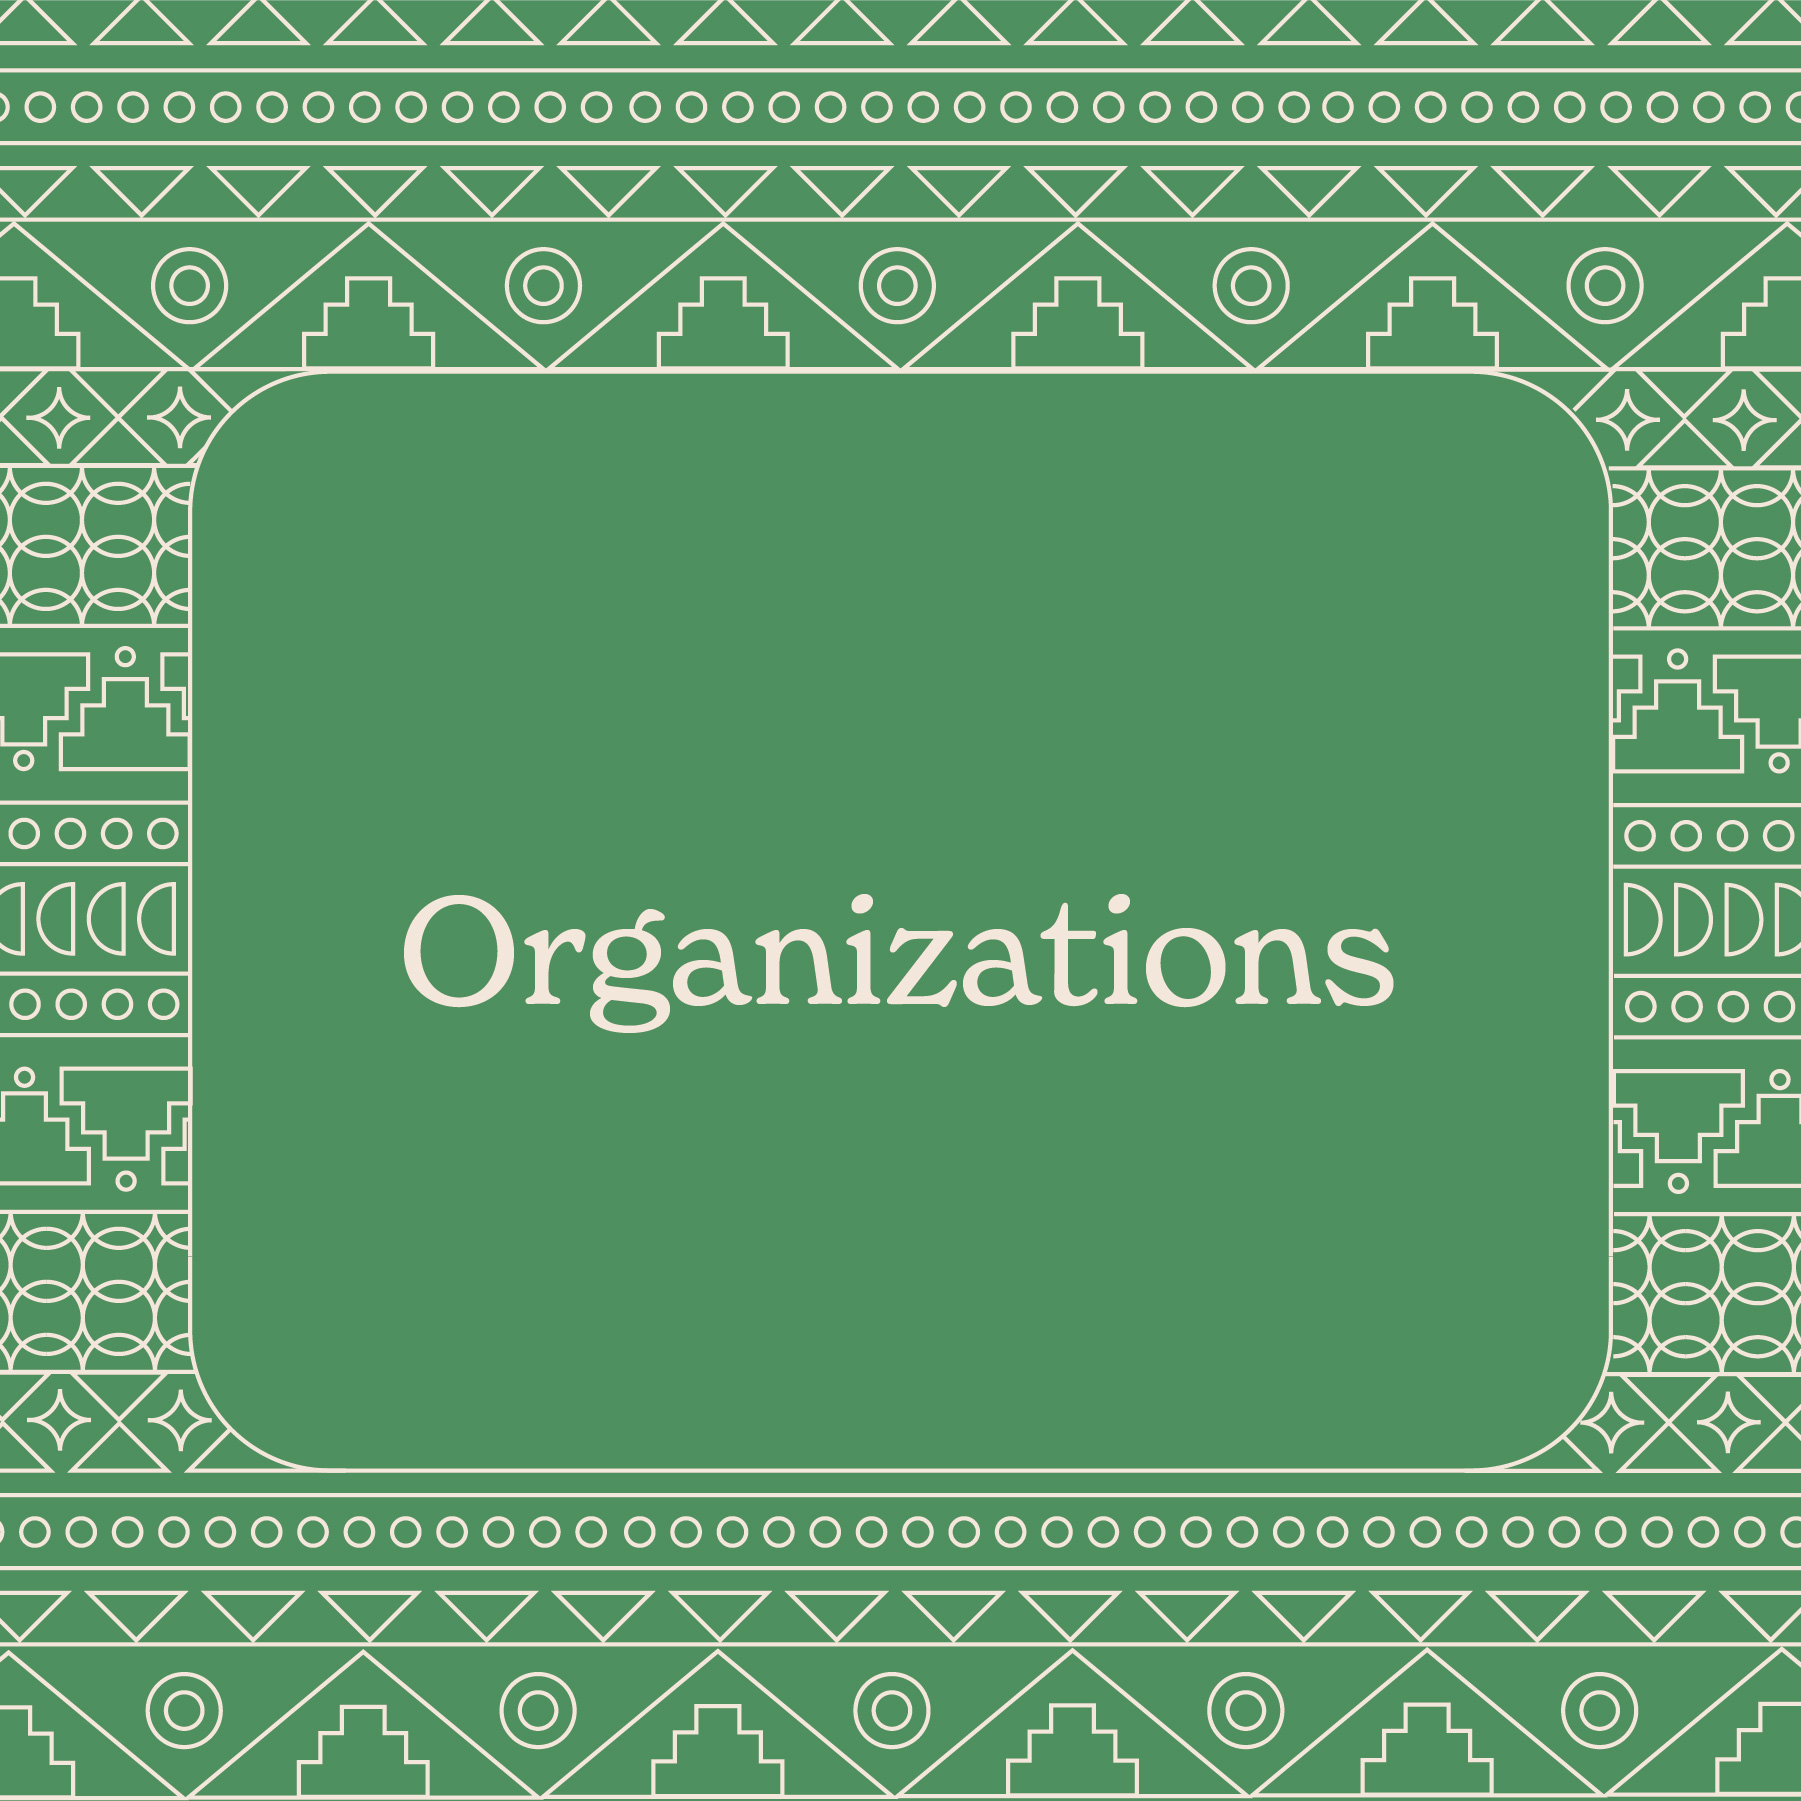 Organizations to Follow